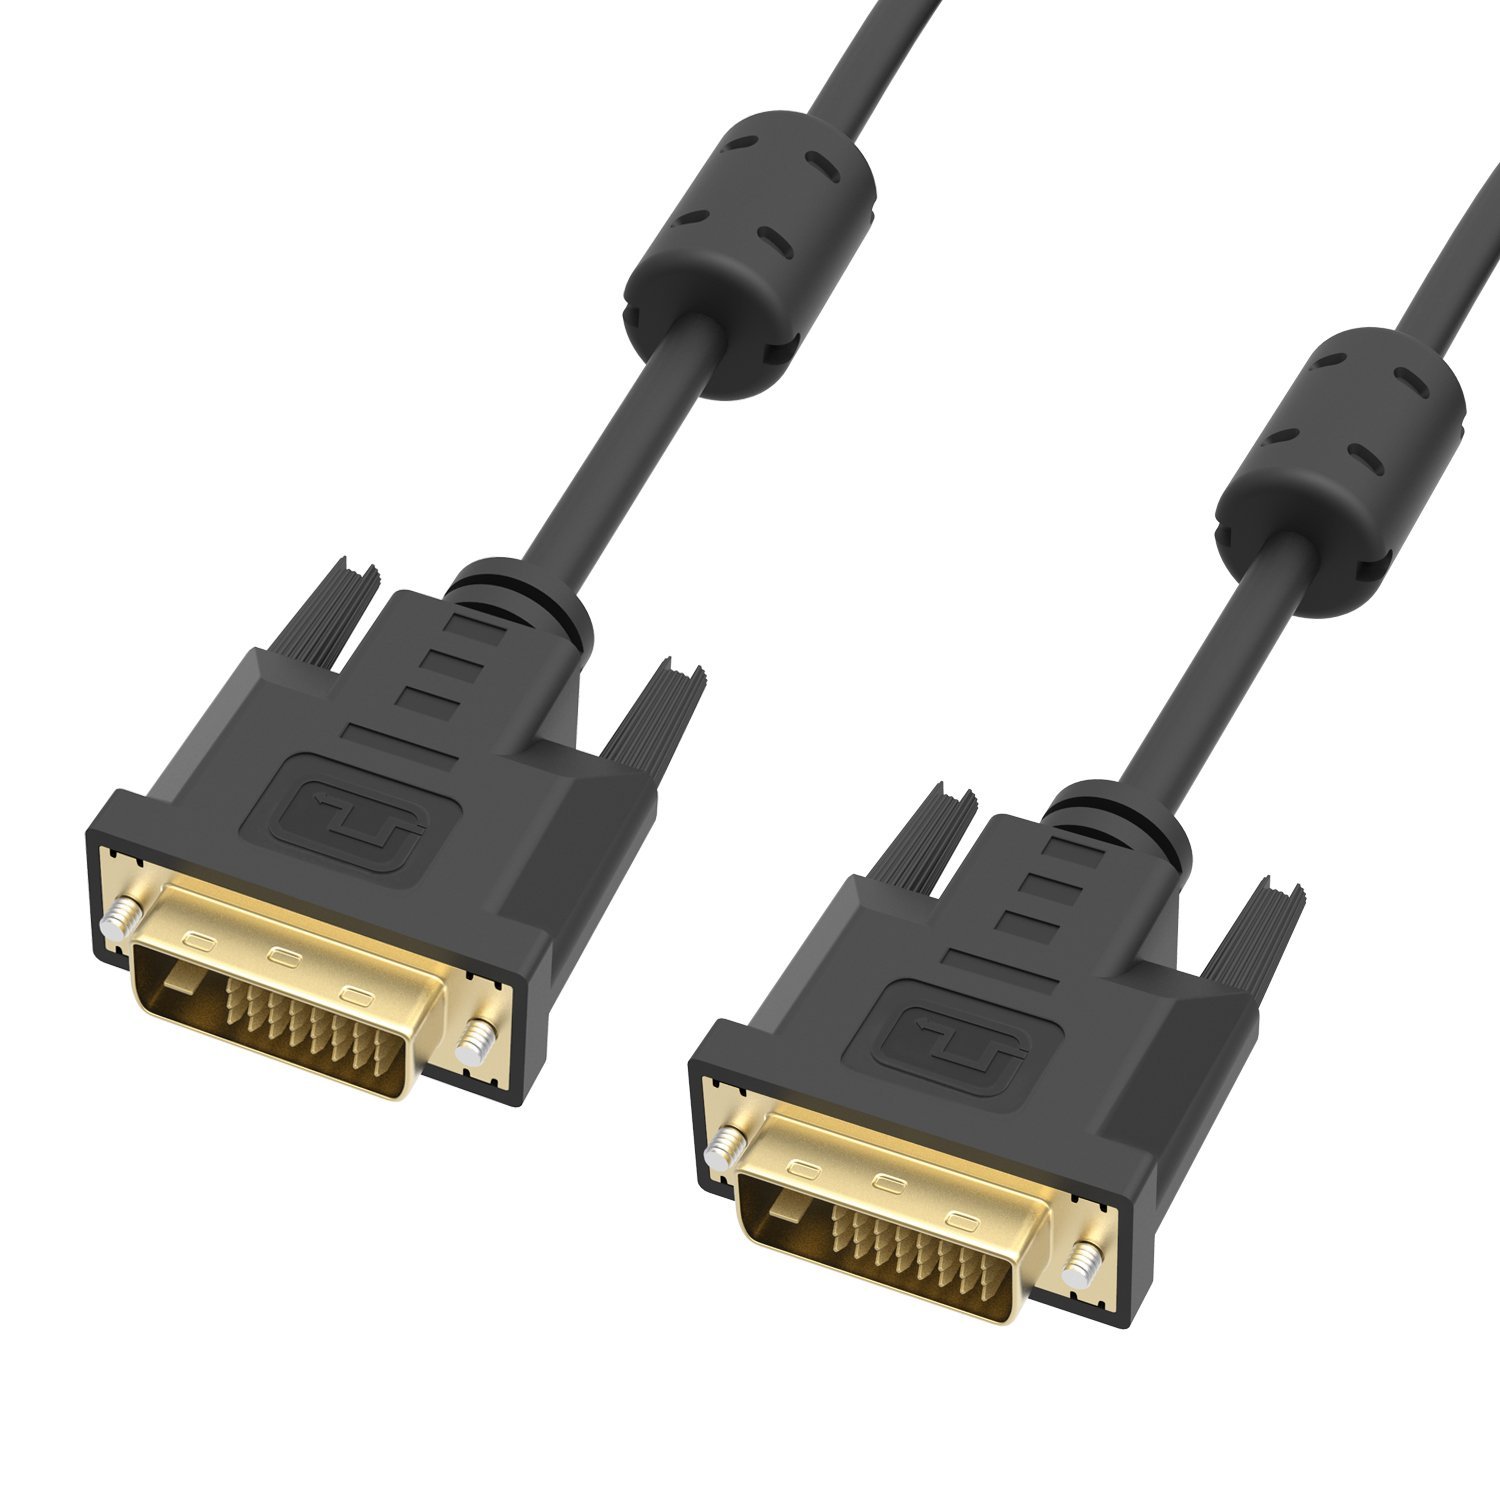 Amazon.com: DVI Cable , ICZI DVI to DVI Monitor Cable Male to Male ...